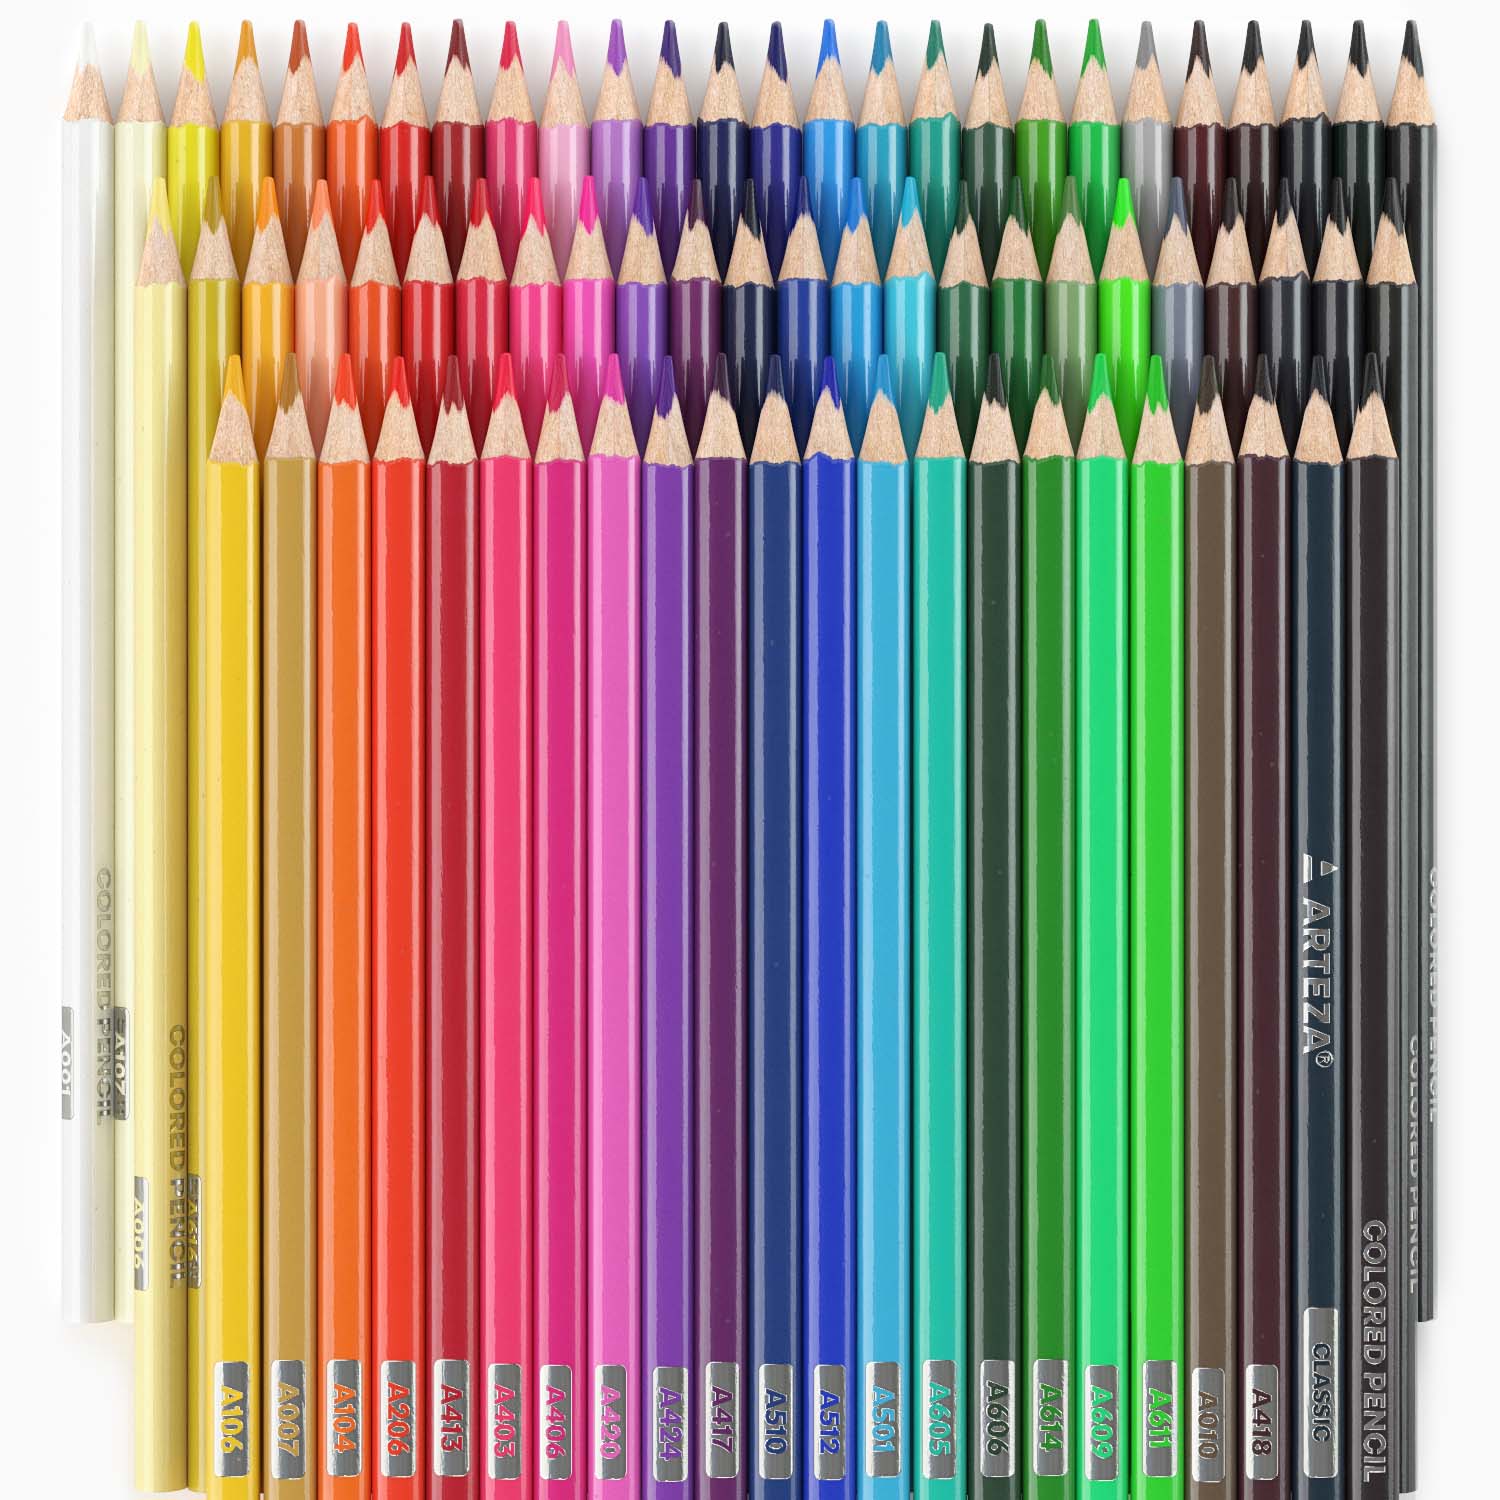 Set 72 Lápices Colores Junior Escolar Dibujo Arteza Classic